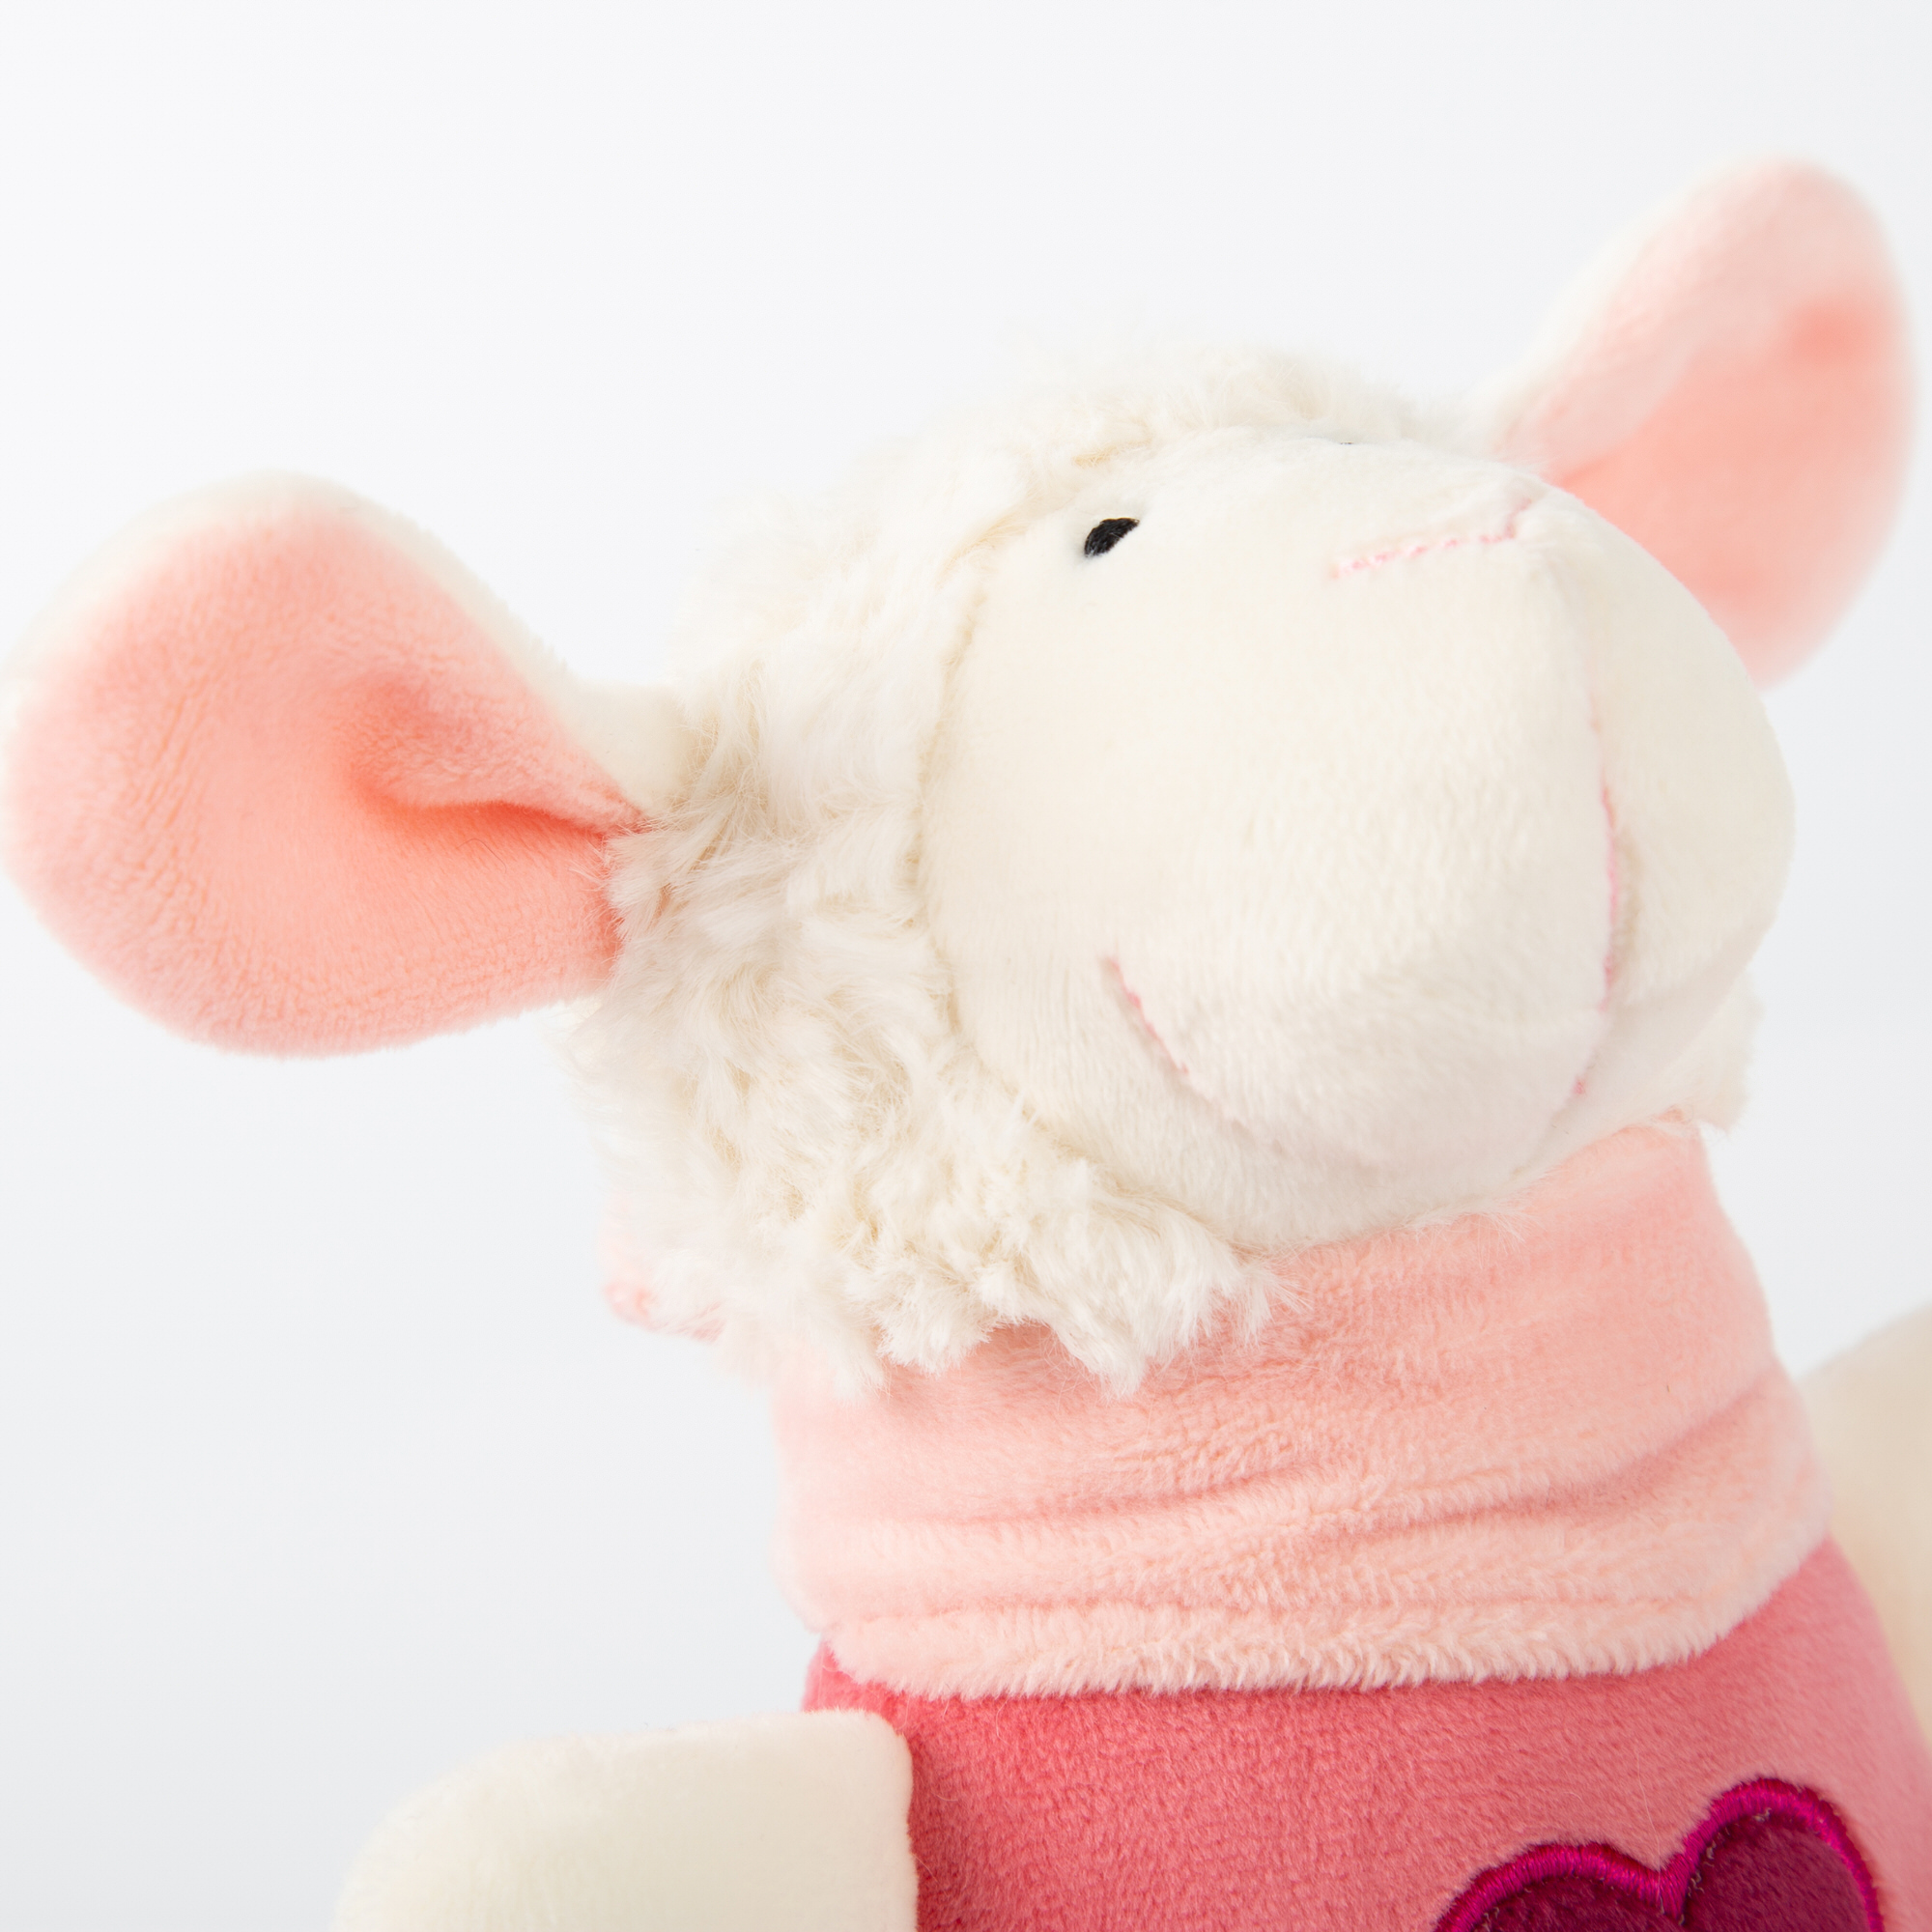 Musical mini baby plush toy sheep